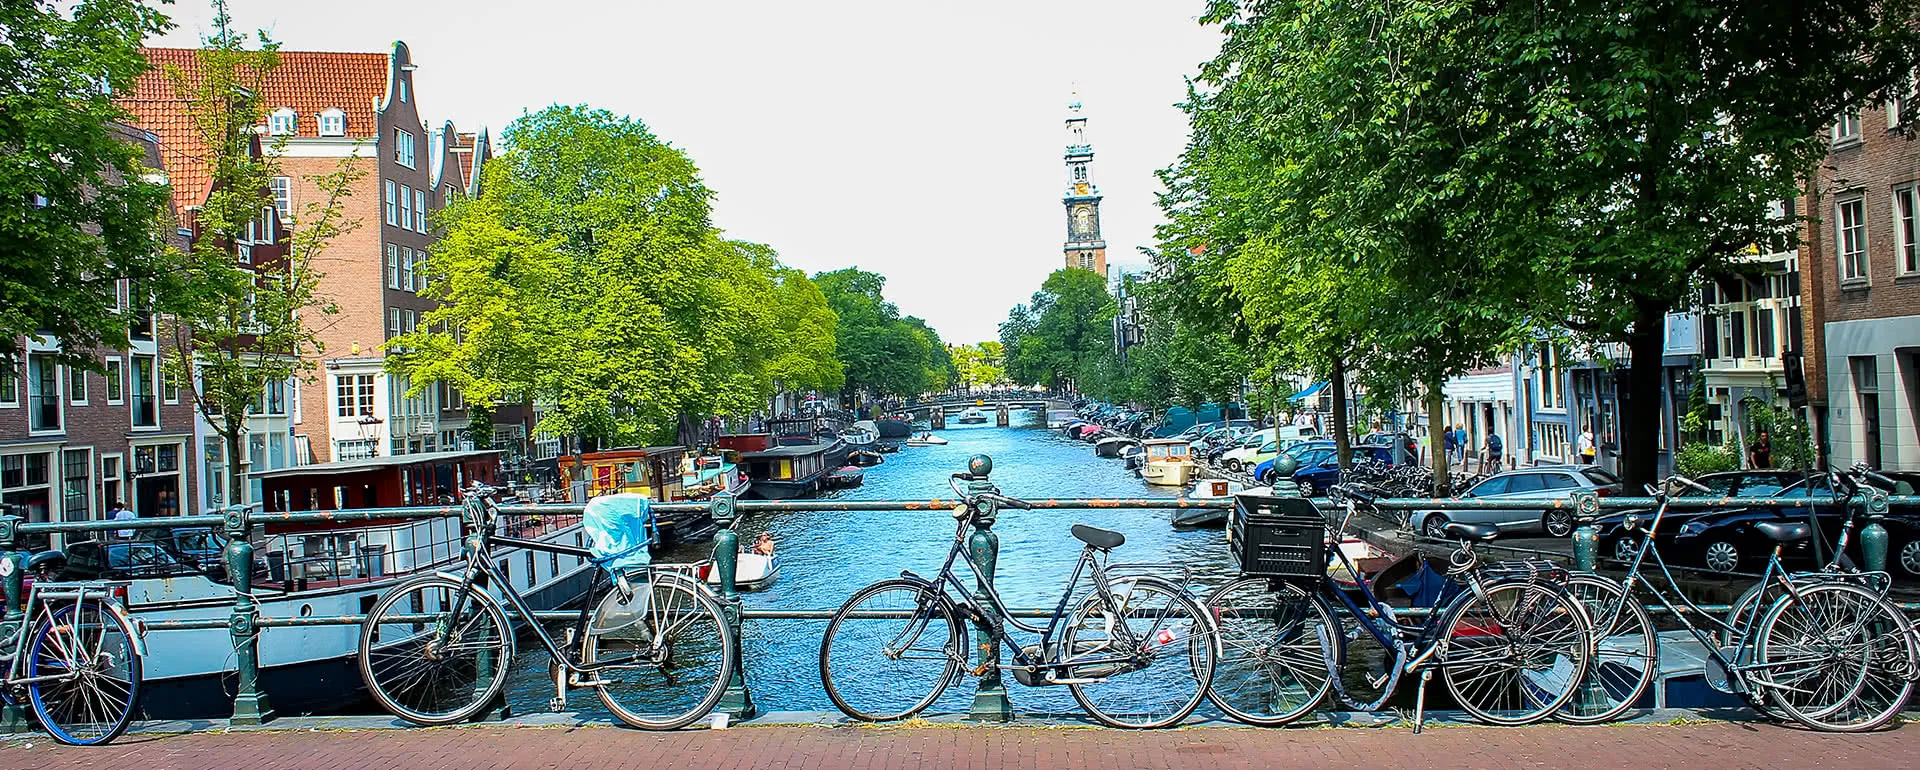 Utrecht - the destination for school trips